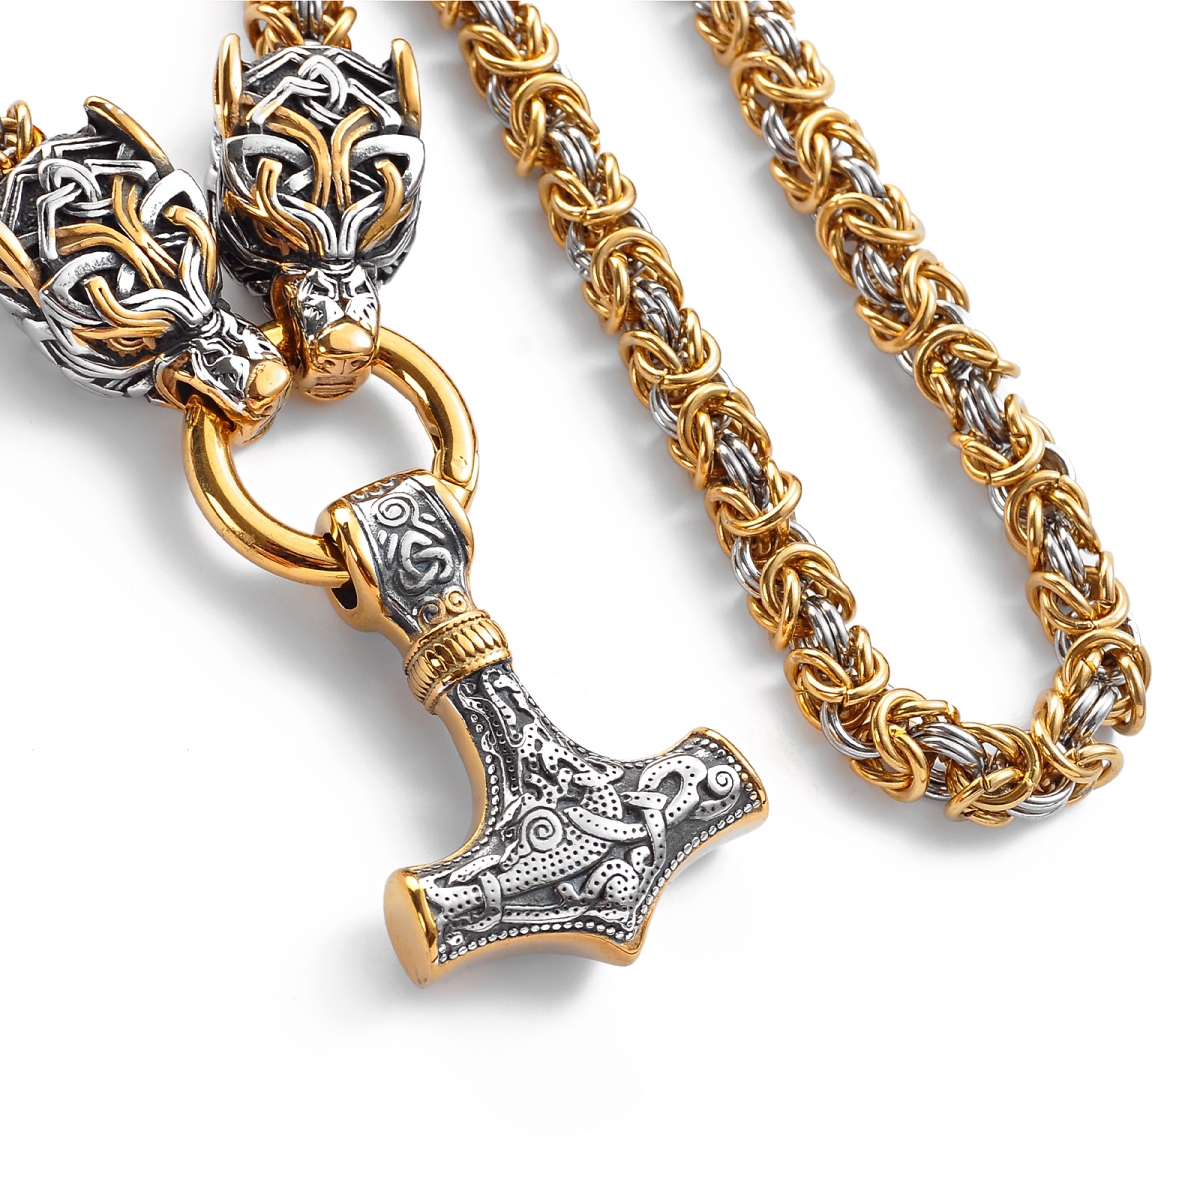 Rhino Hammer Necklace 14k Gold - Small – VARGAS GOTEO JEWELRY